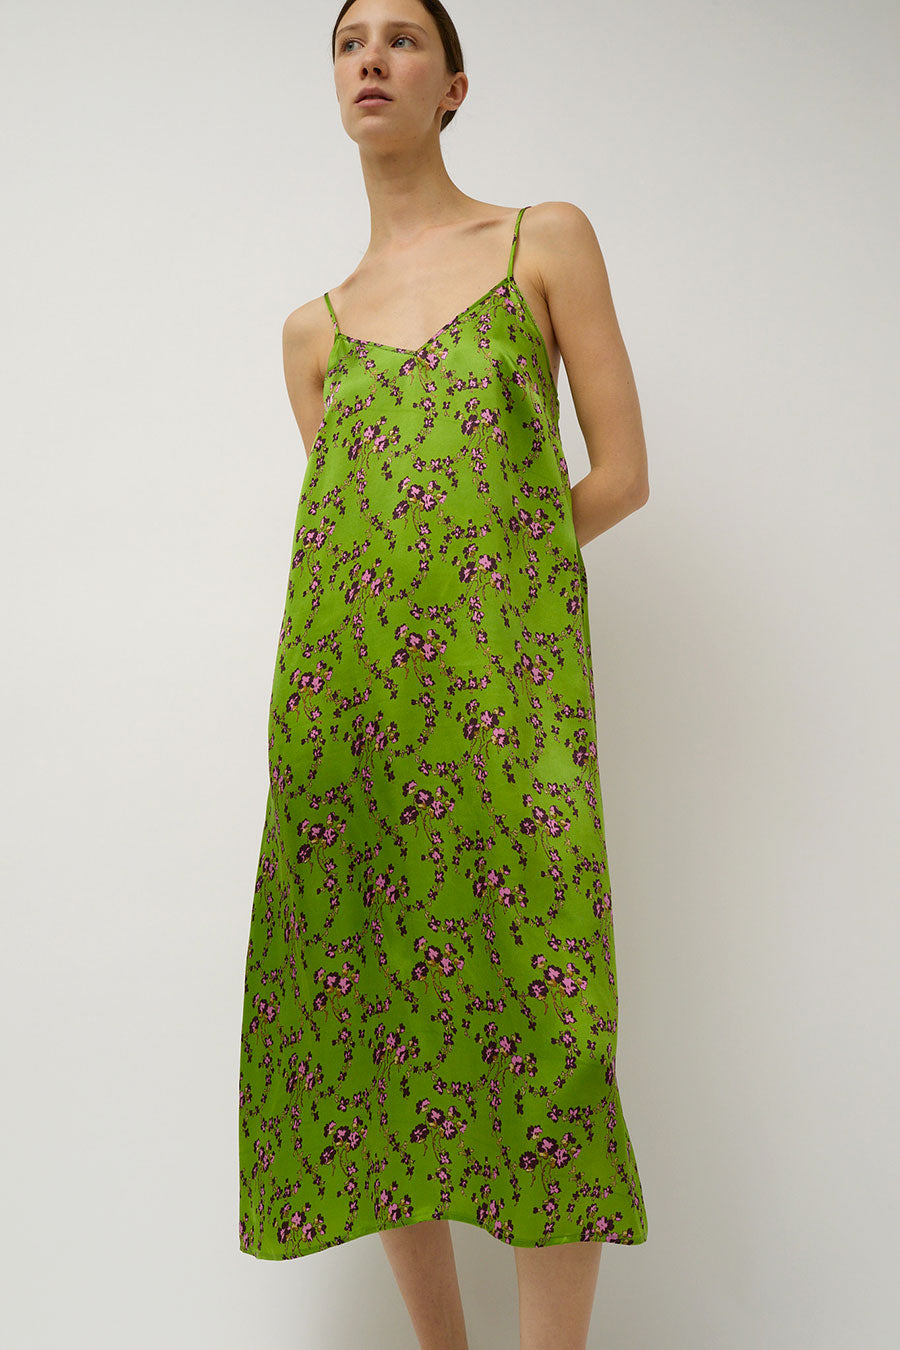 No.6 Sam Slip Dress in Green Trellis